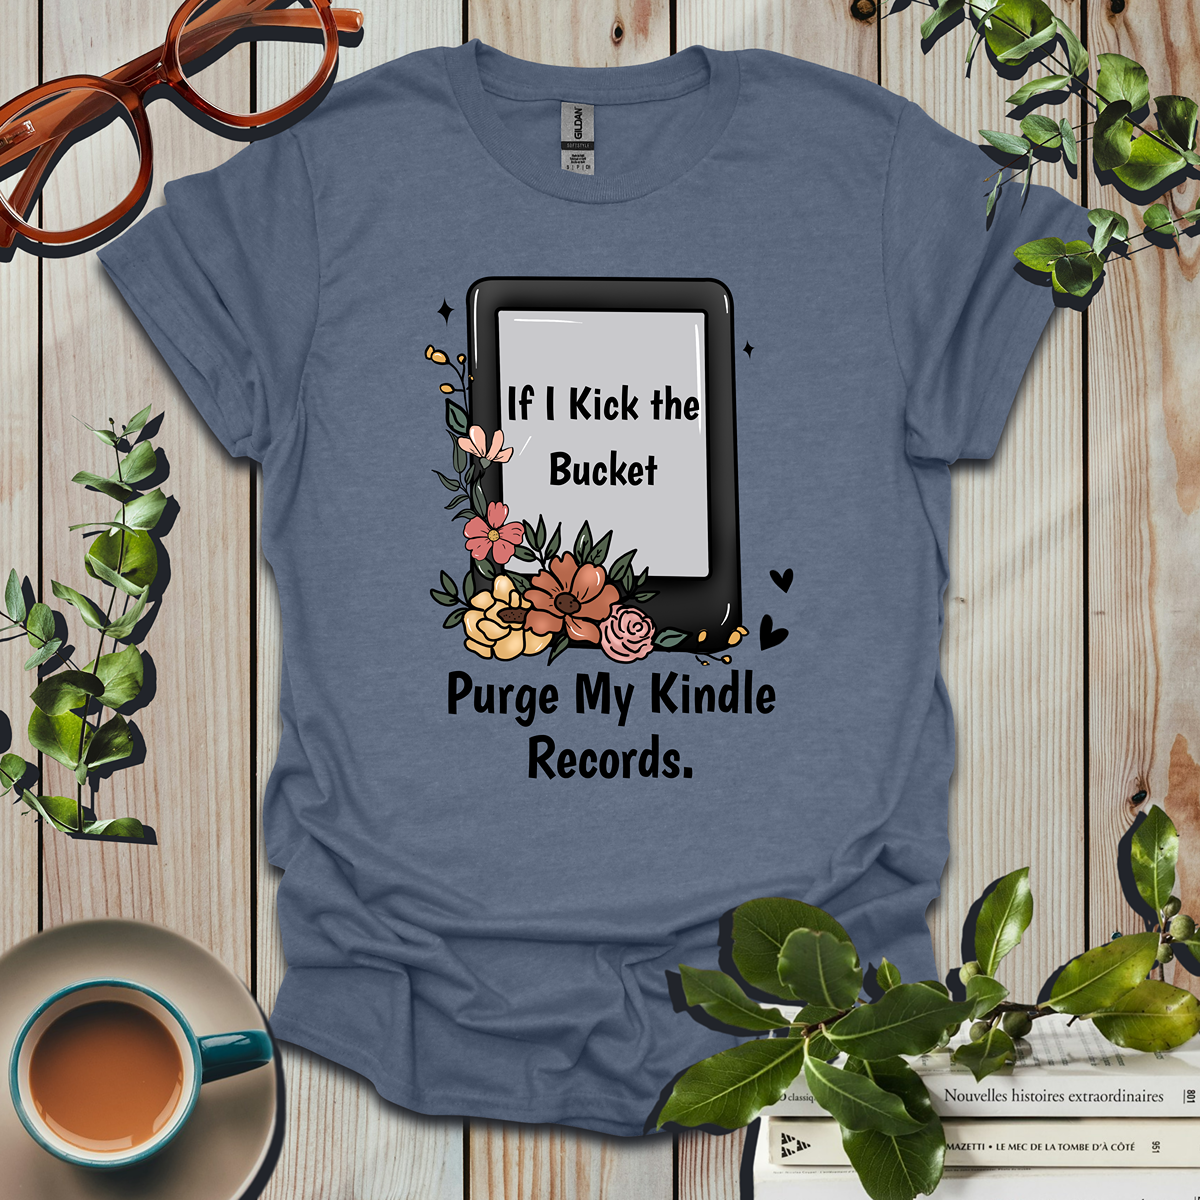 If I Kick The Bucket, Purge My Kindle Records Funny T-Shirt